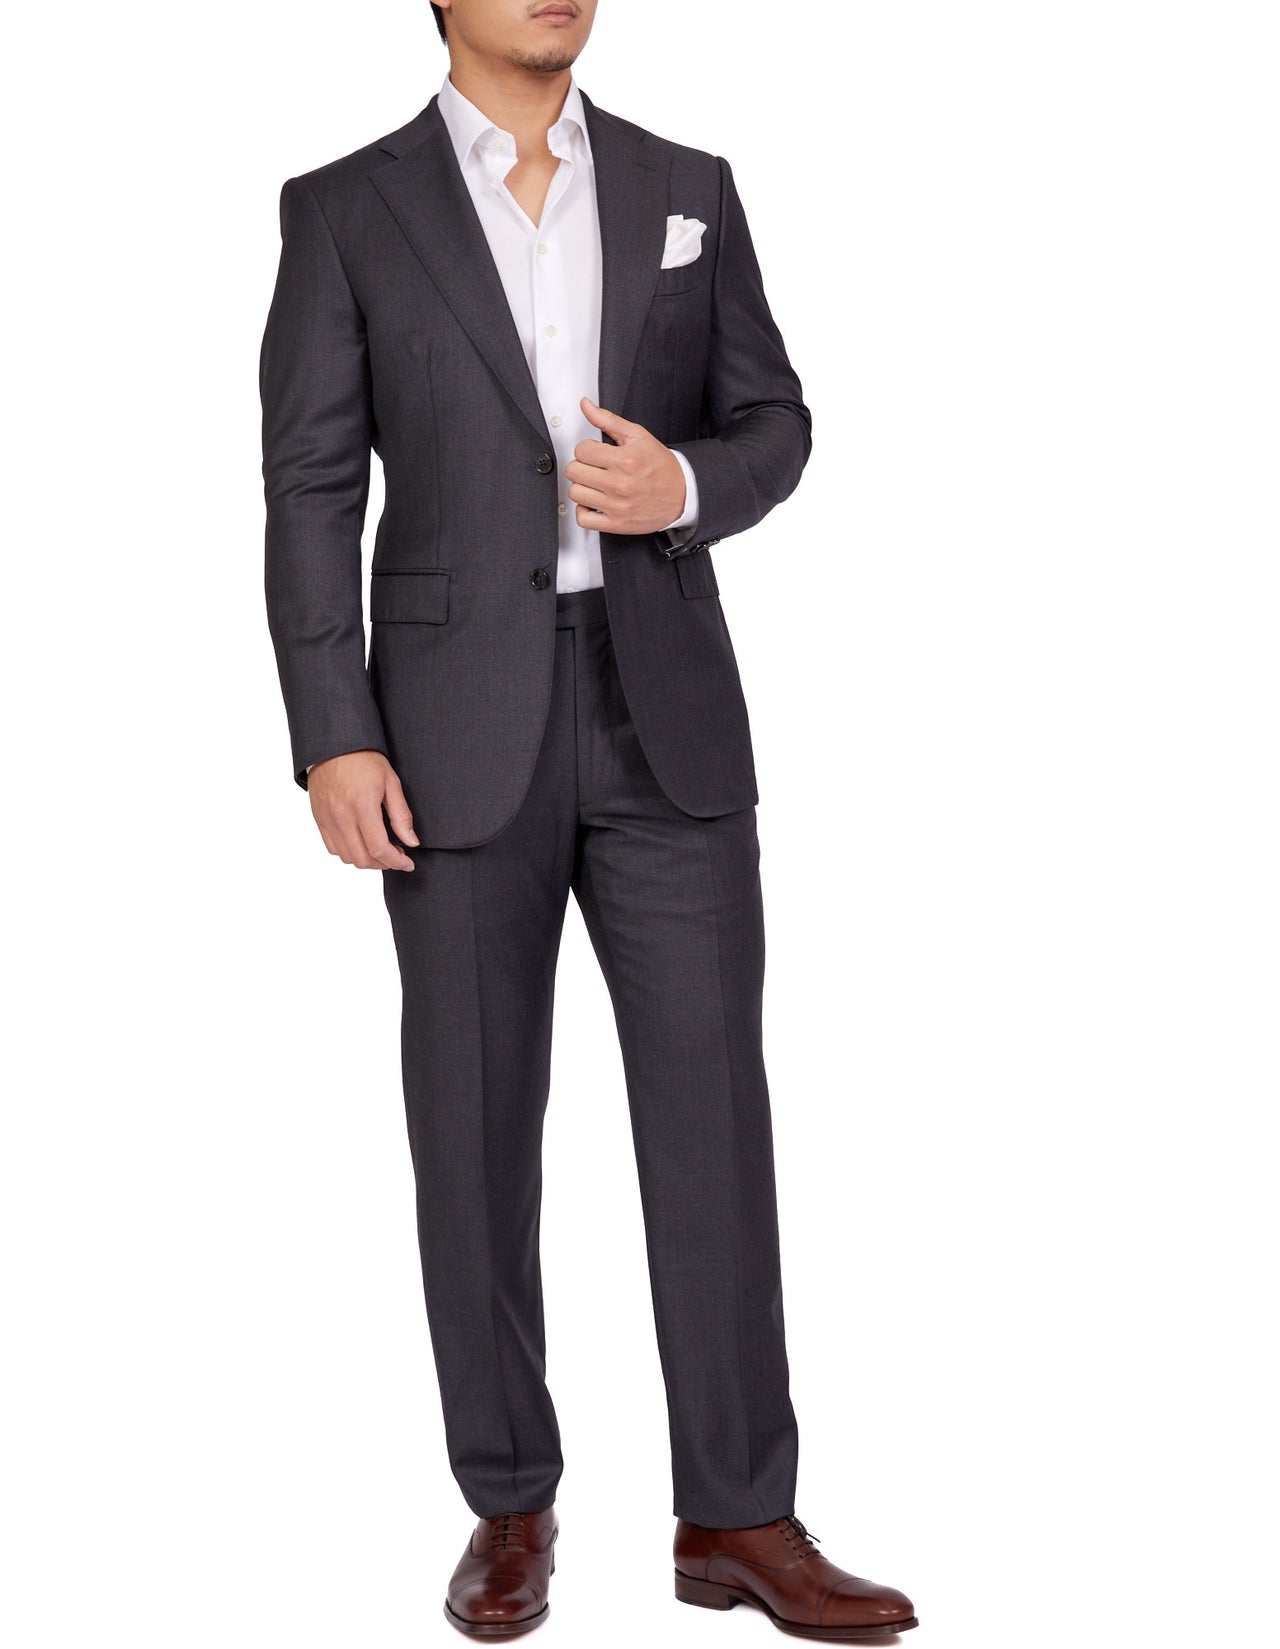 HENRY SARTORIAL X DORMEUIL Full Canvas Plain Suit CHARCOAL LG